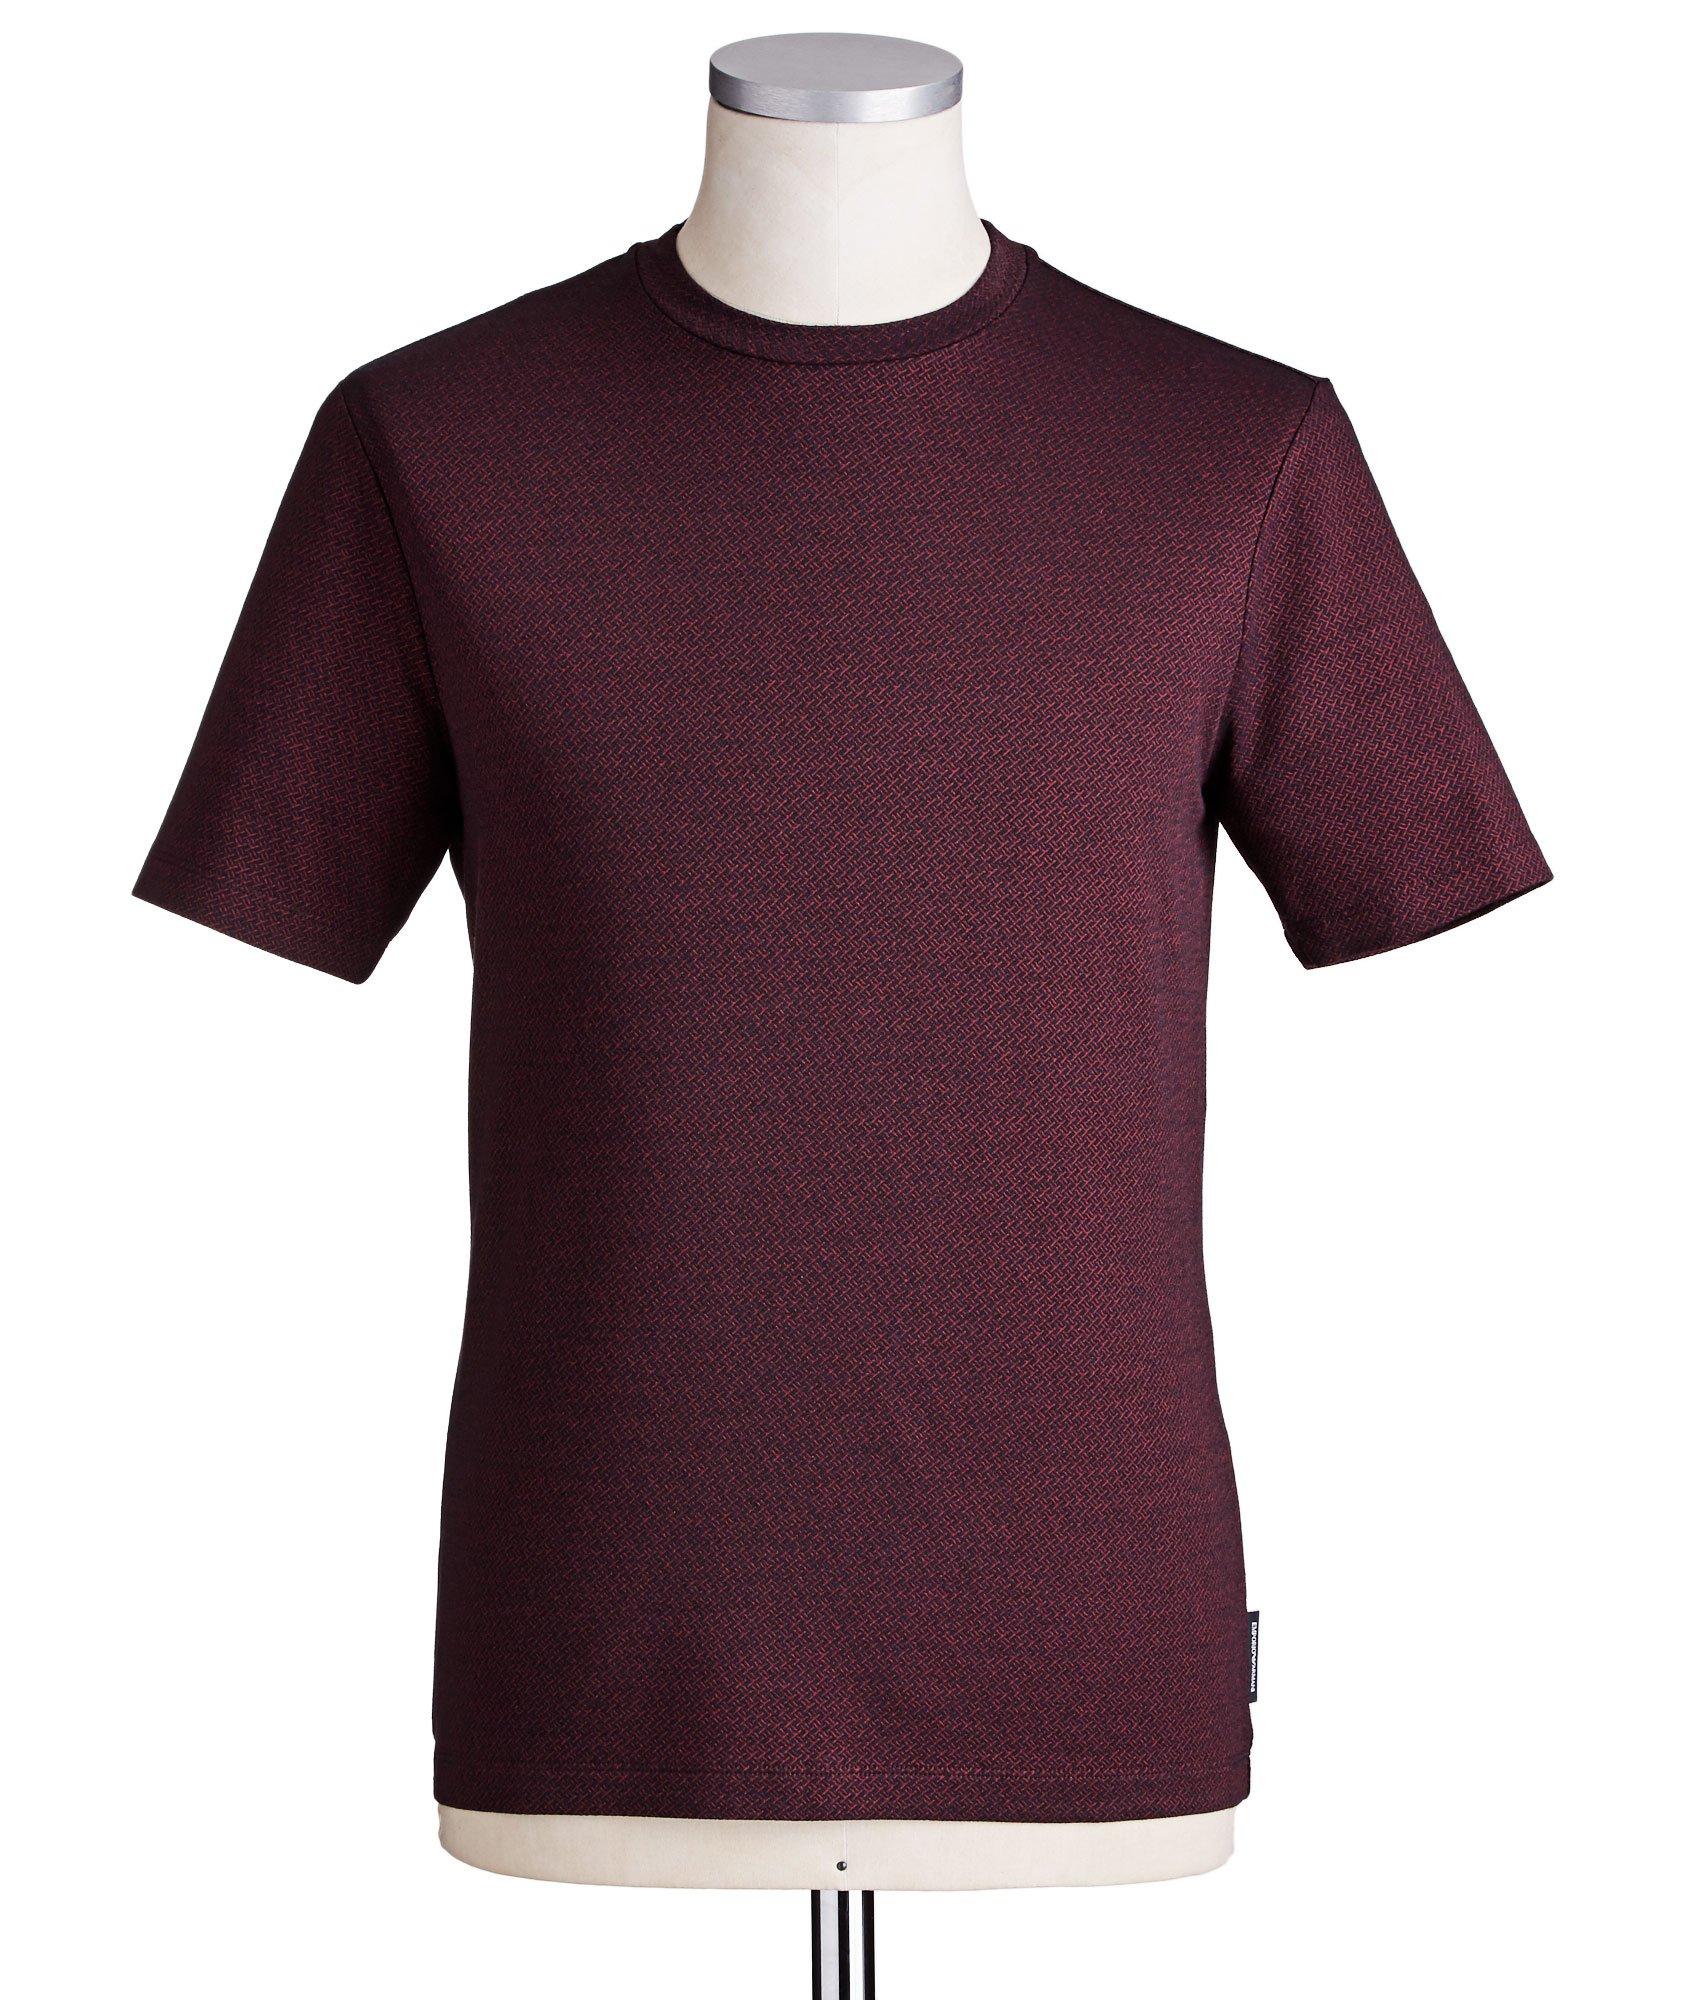 Printed Stretch Blend T-Shirt image 0